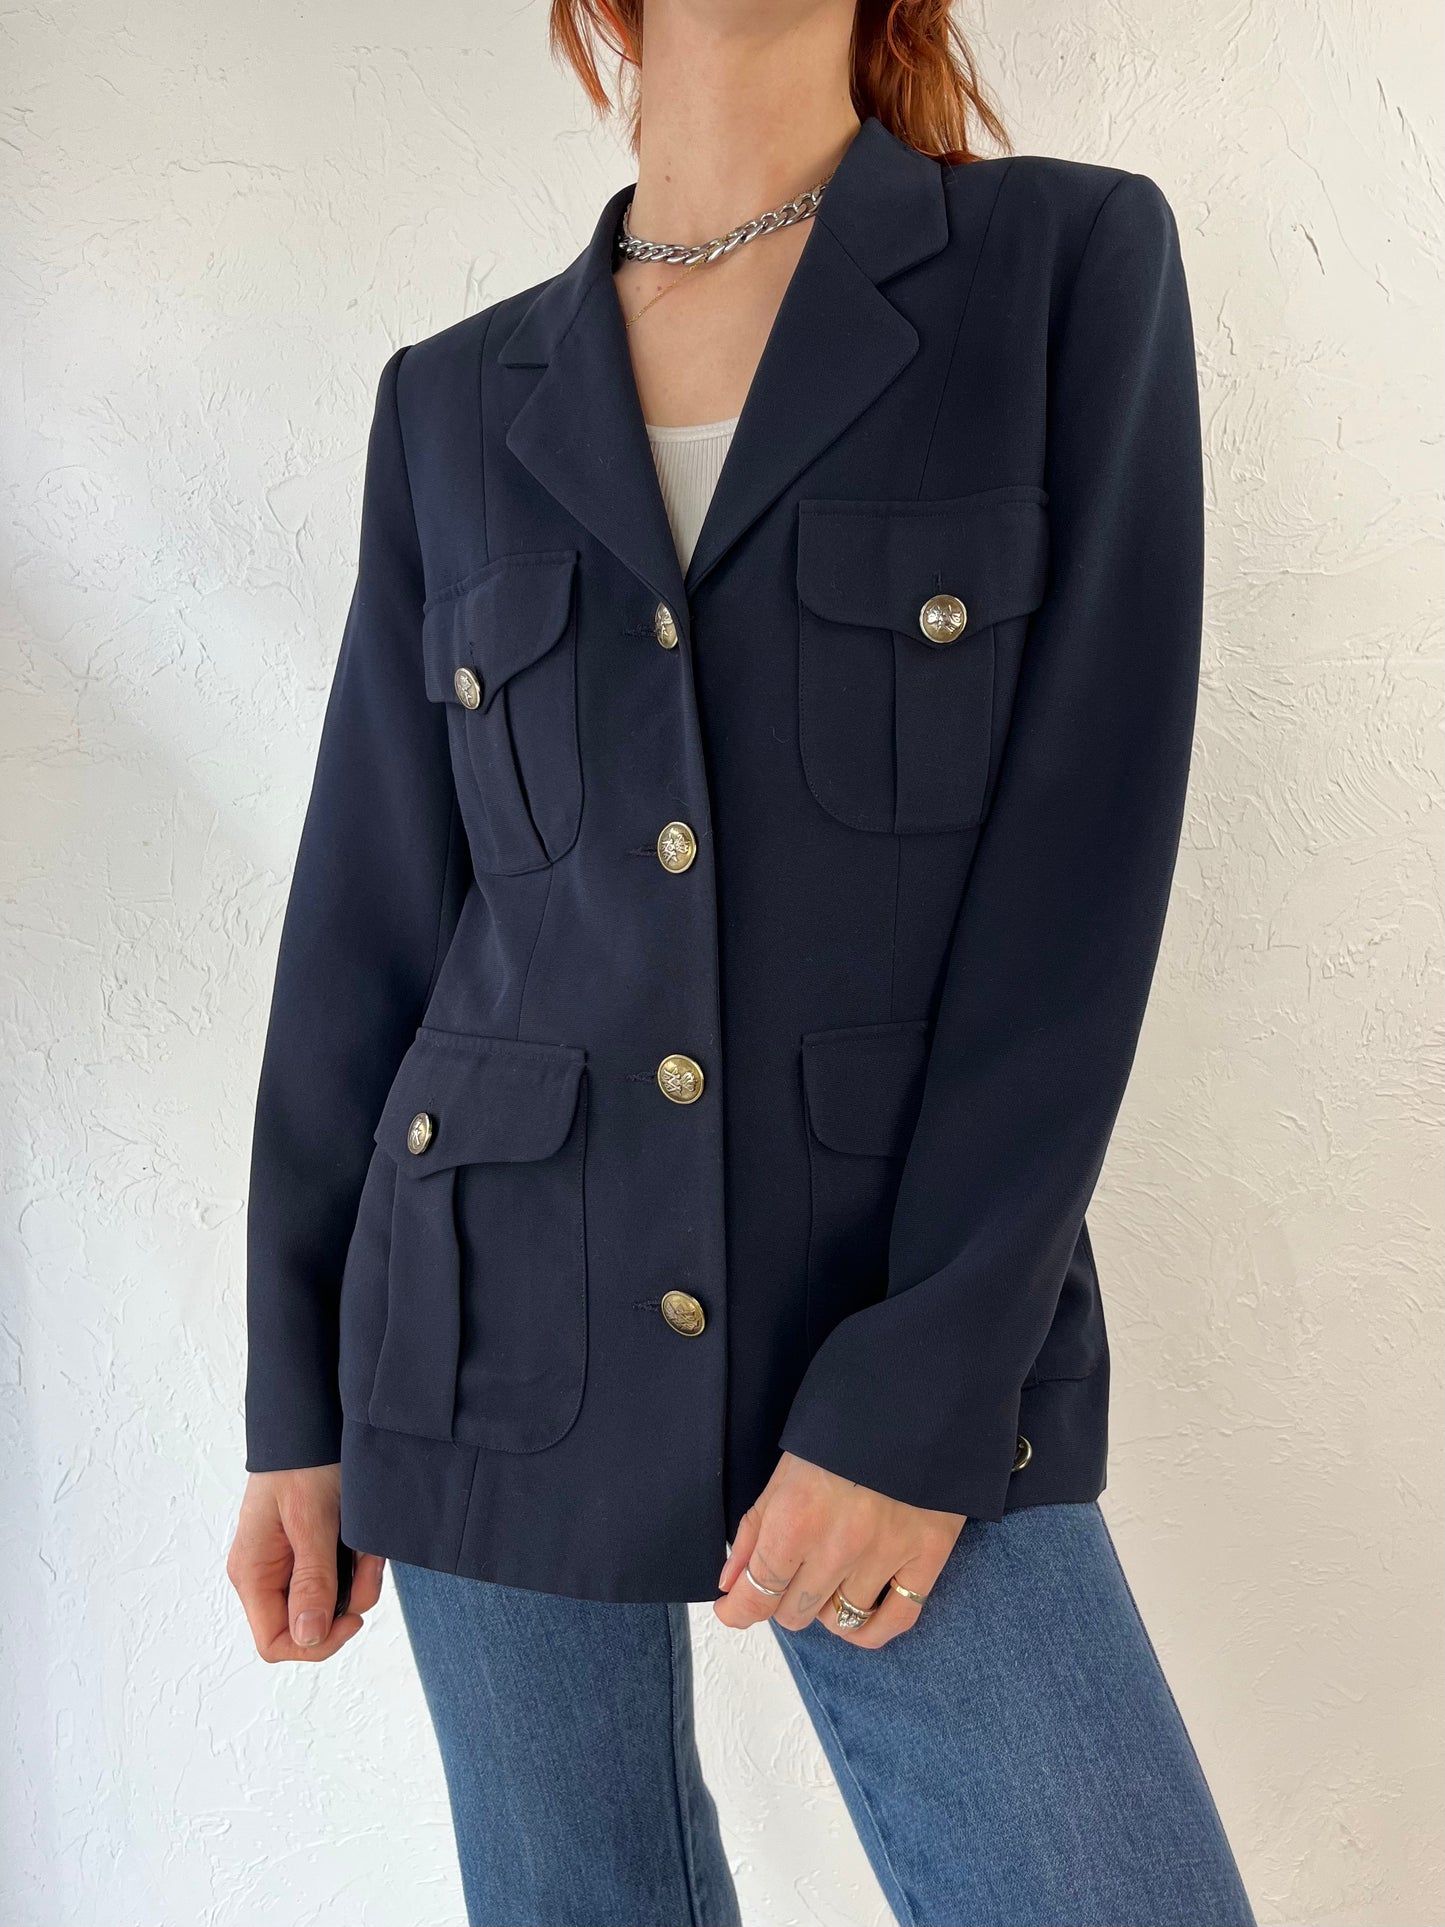 90s 'A Wear’ Navy Blue Dress Jacket / Small